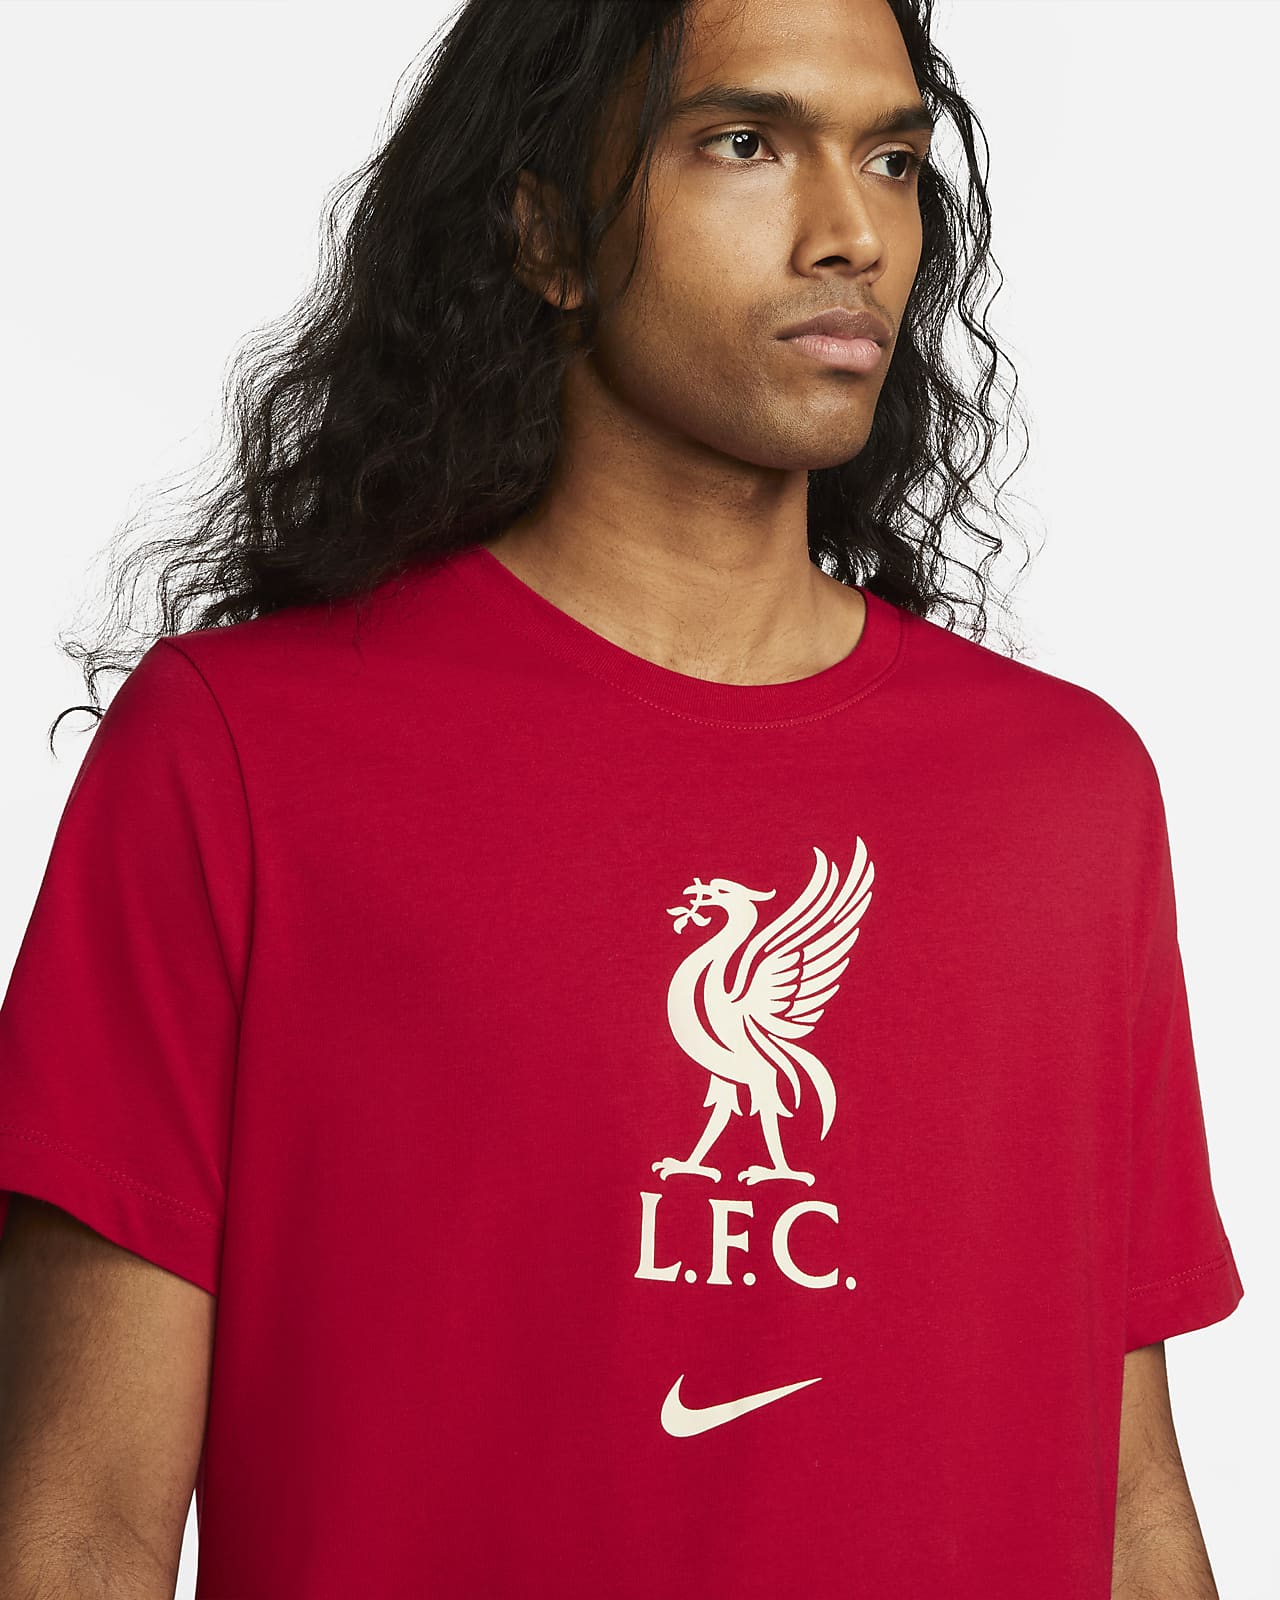 Liverpool 1973 Shirt | tunersread.com